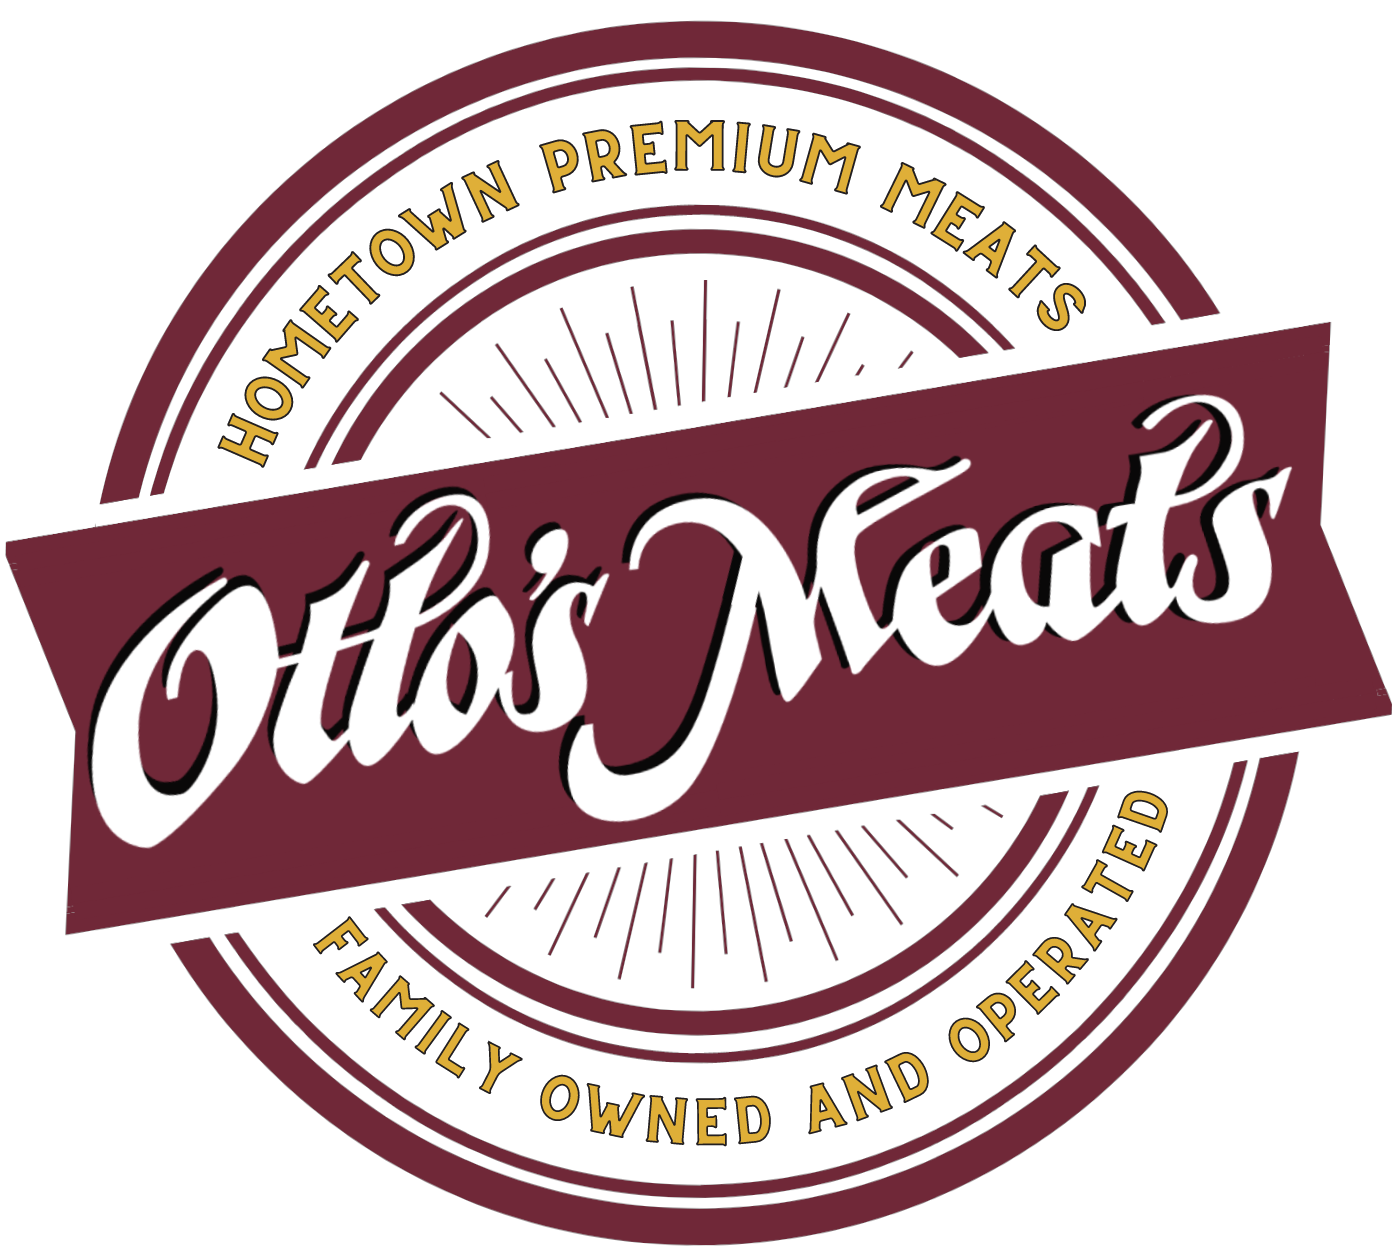 Ottos Meats